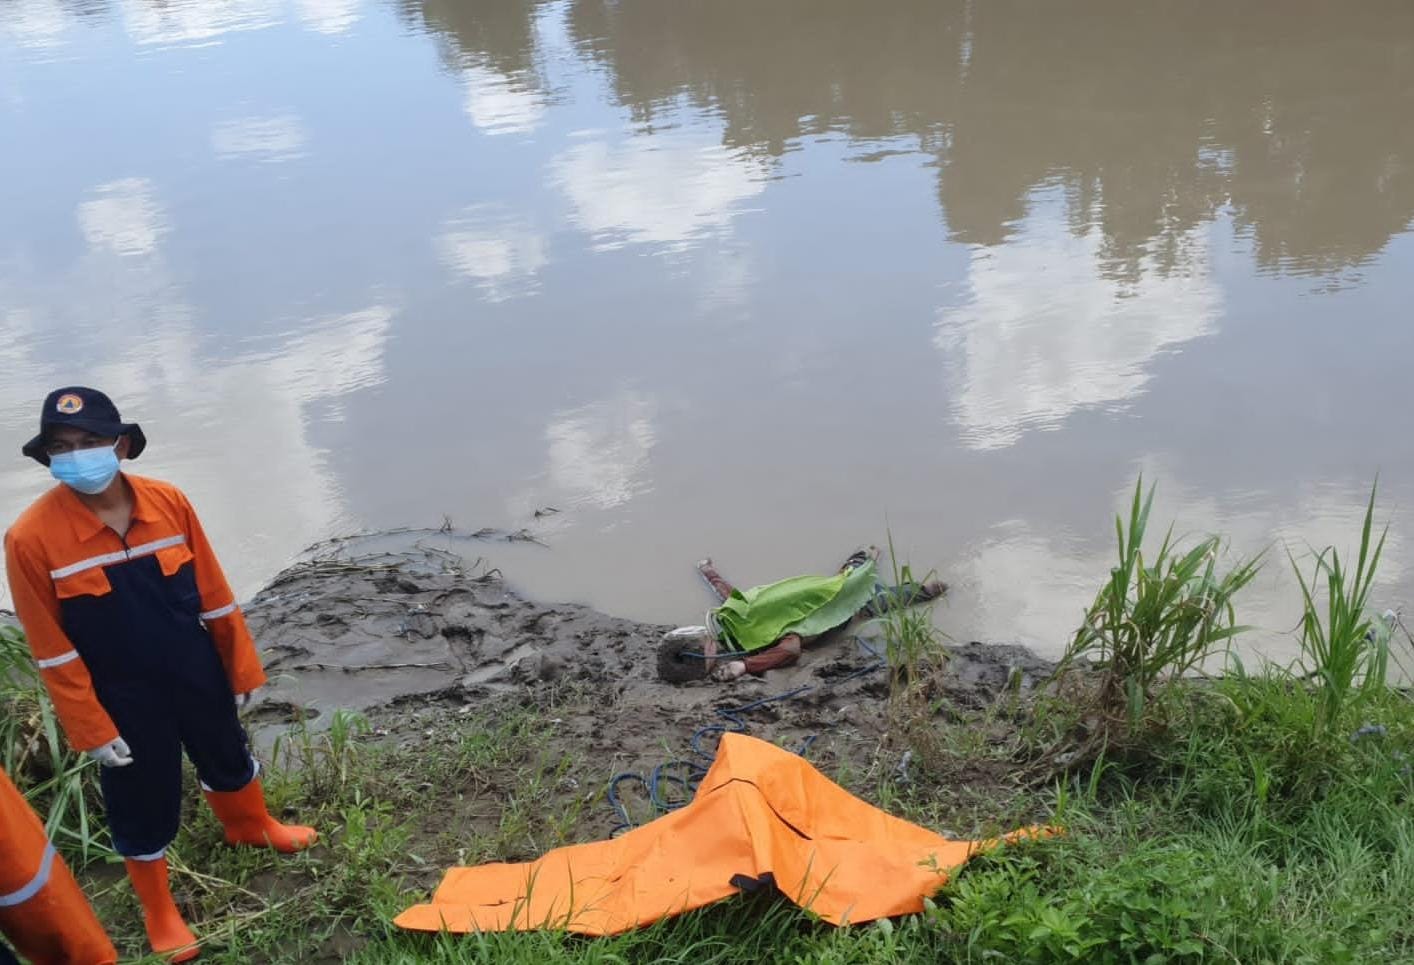 Identitas Mayat Laki-laki Ditemukan di Sungai Serayu Diketahui, Polisi Masih Lakukan Pendalaman